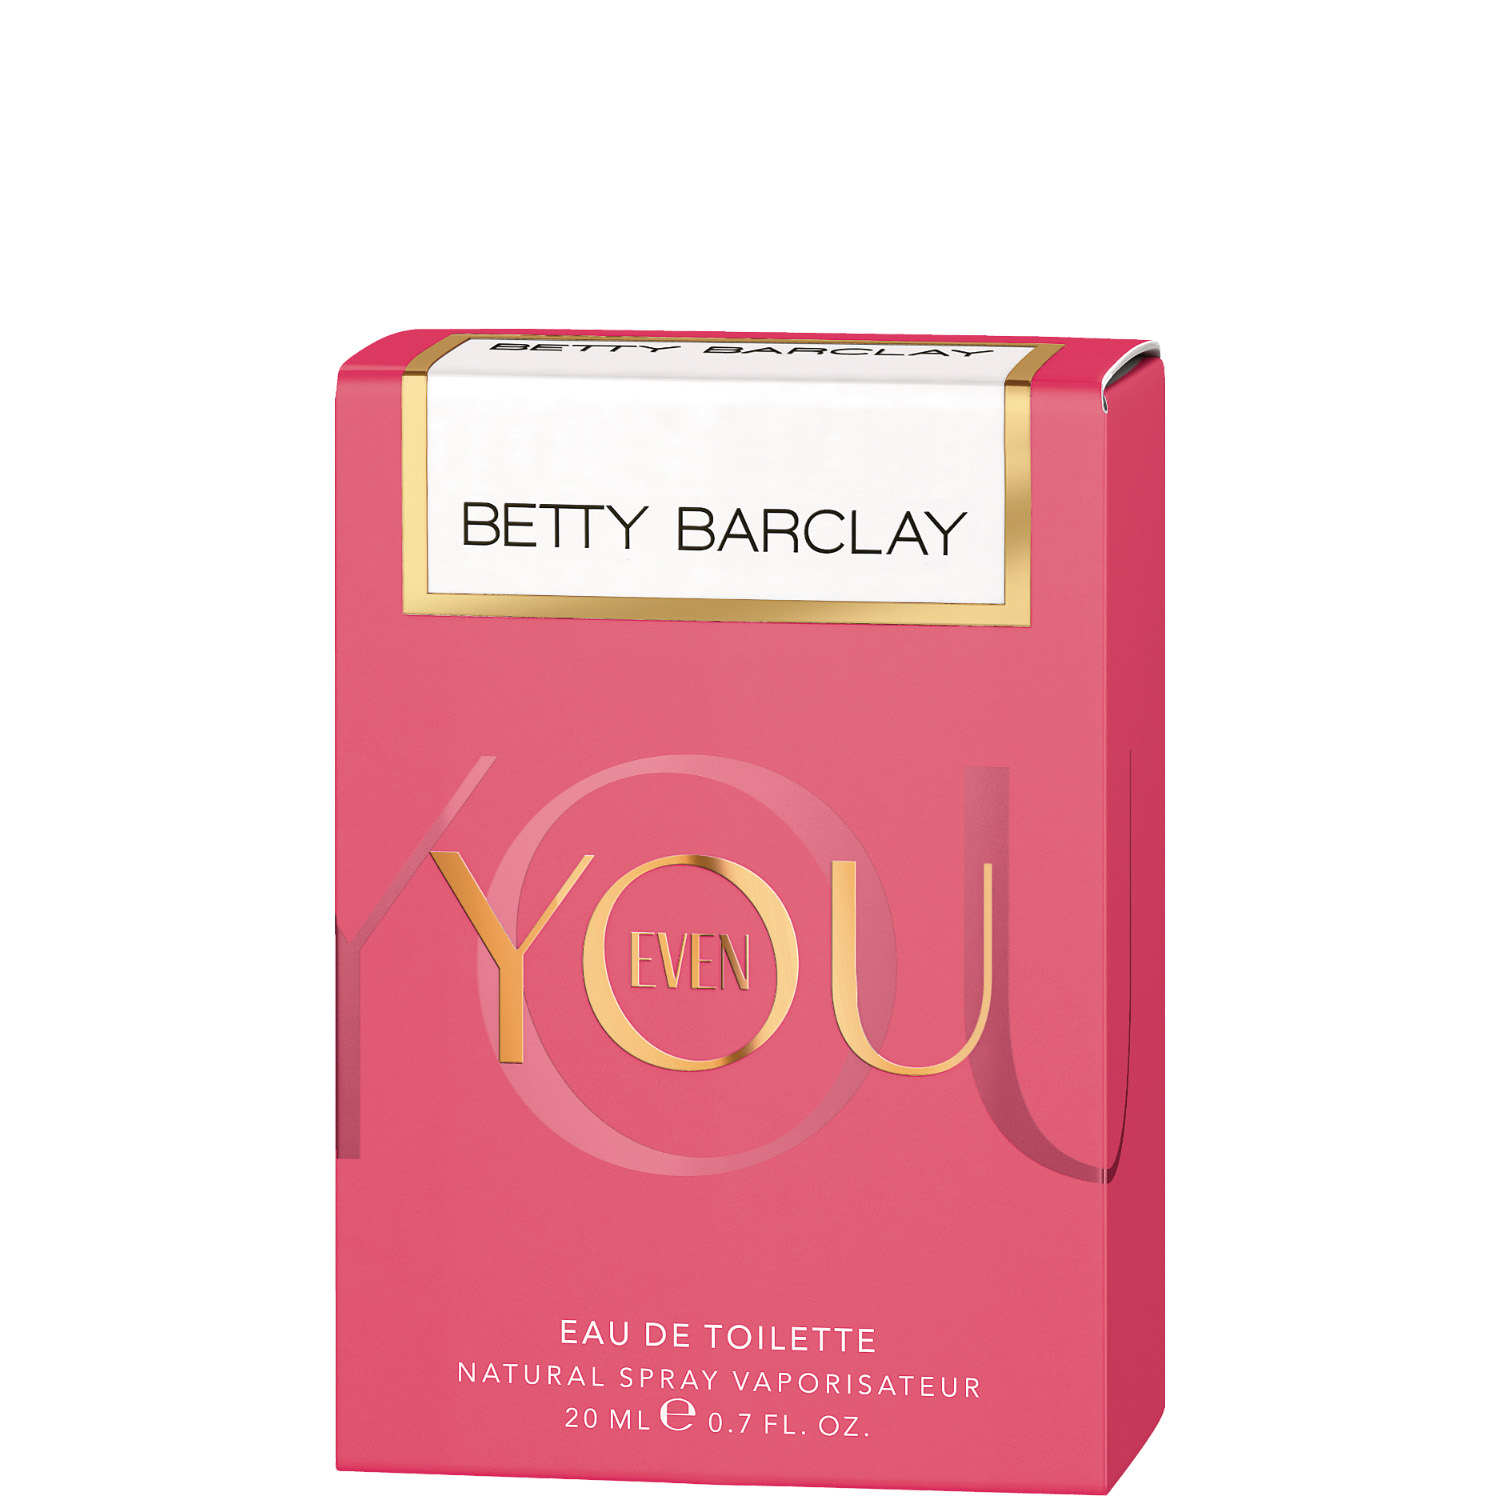 Betty Barclay Even You Eau de Toilette 20ml